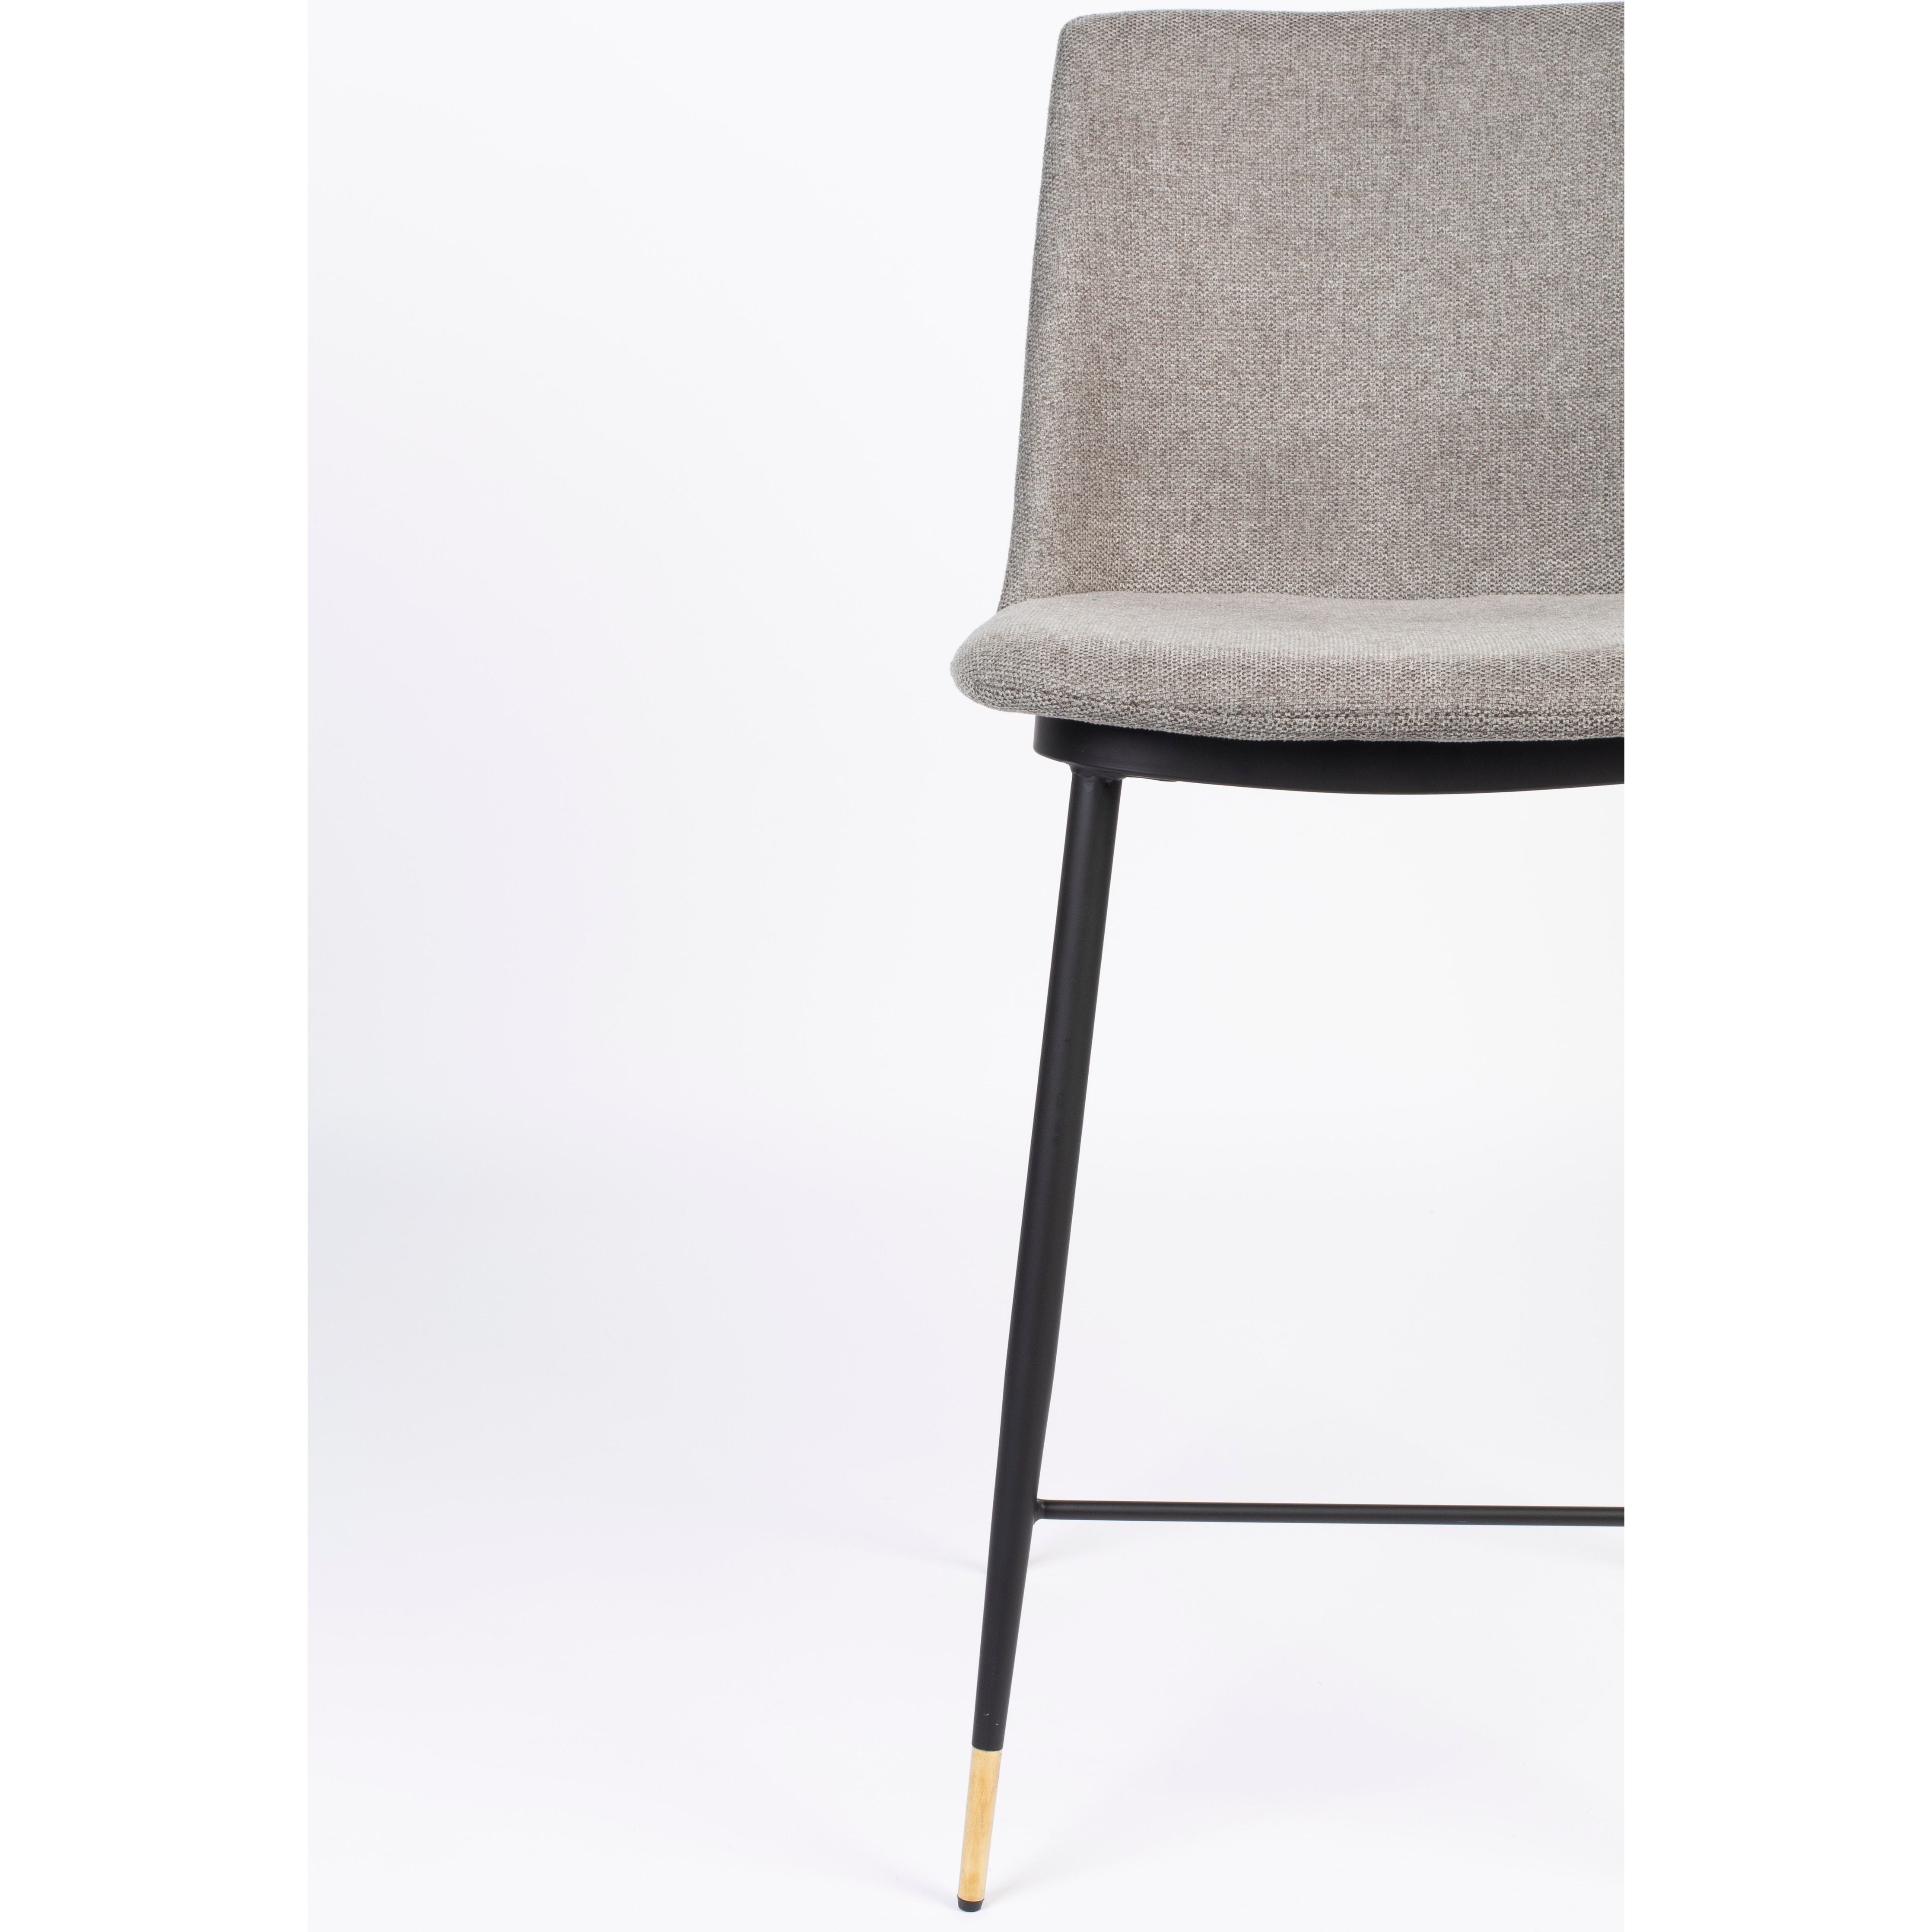 Bar stool lionel light gray